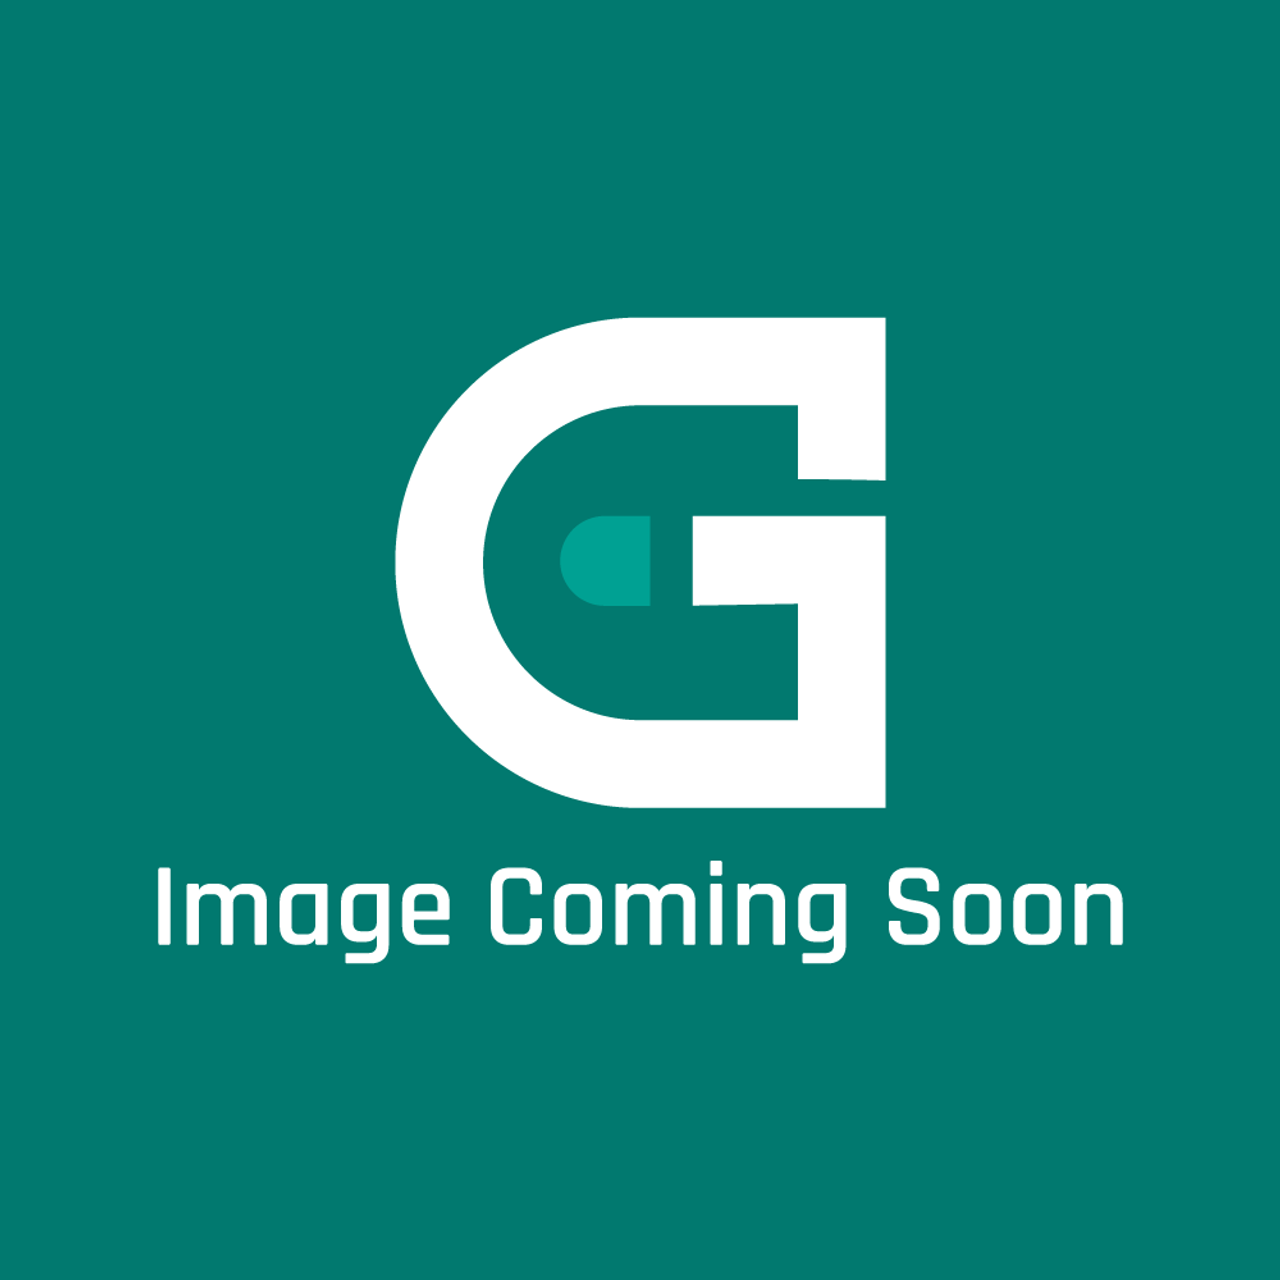 AGA Marvel S30227-CRN - D/A-25' Refrig AGA Marvel Cl Rh-Crn - Image Coming Soon!